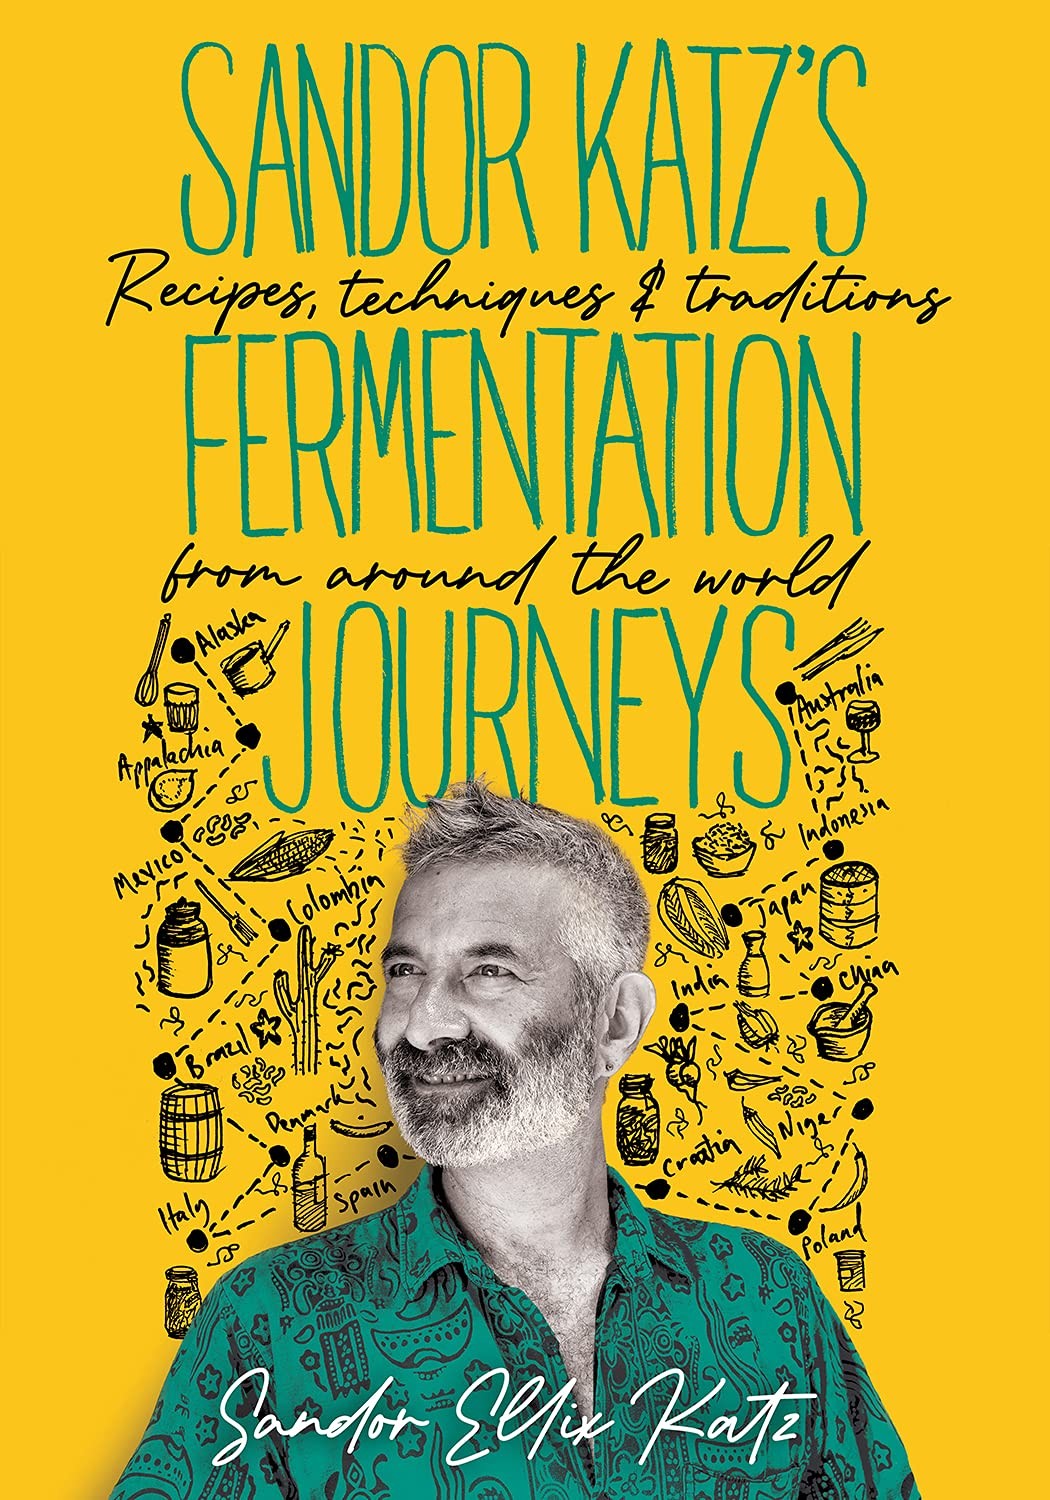 Image of The Art of Fermentation book By Sandor Katz